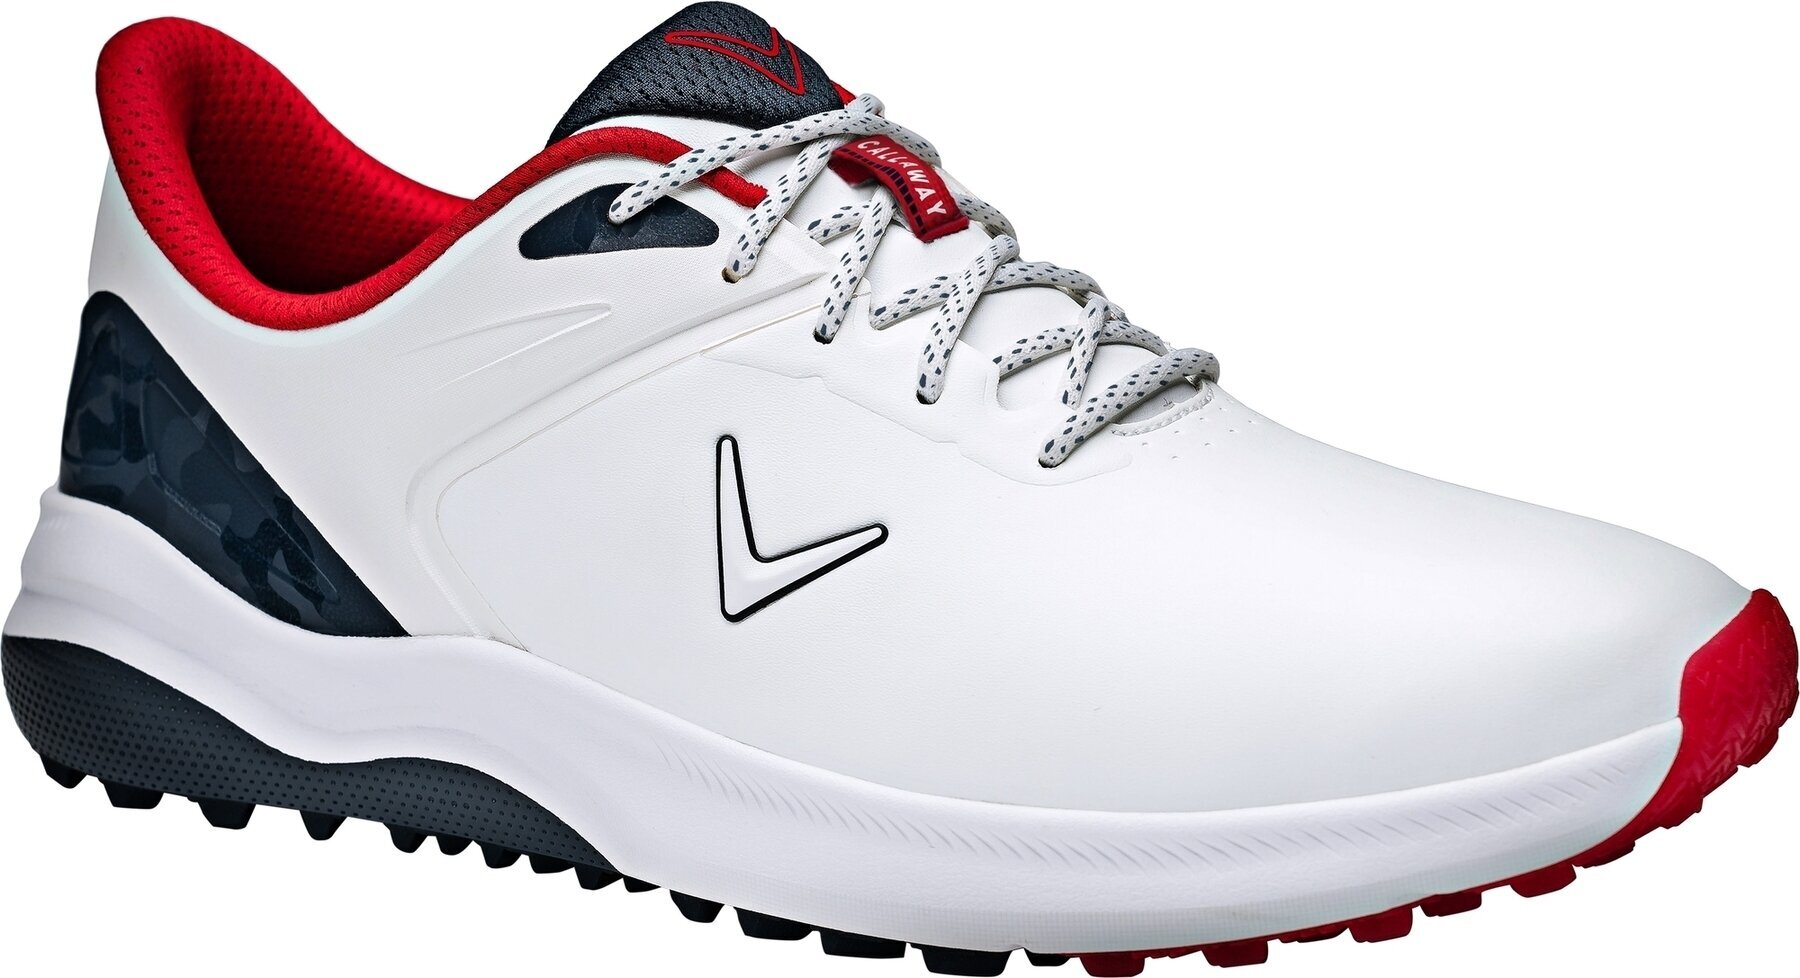 Miesten golfkengät Callaway Lazer Mens Golf Shoes White/Navy/Red 48,5